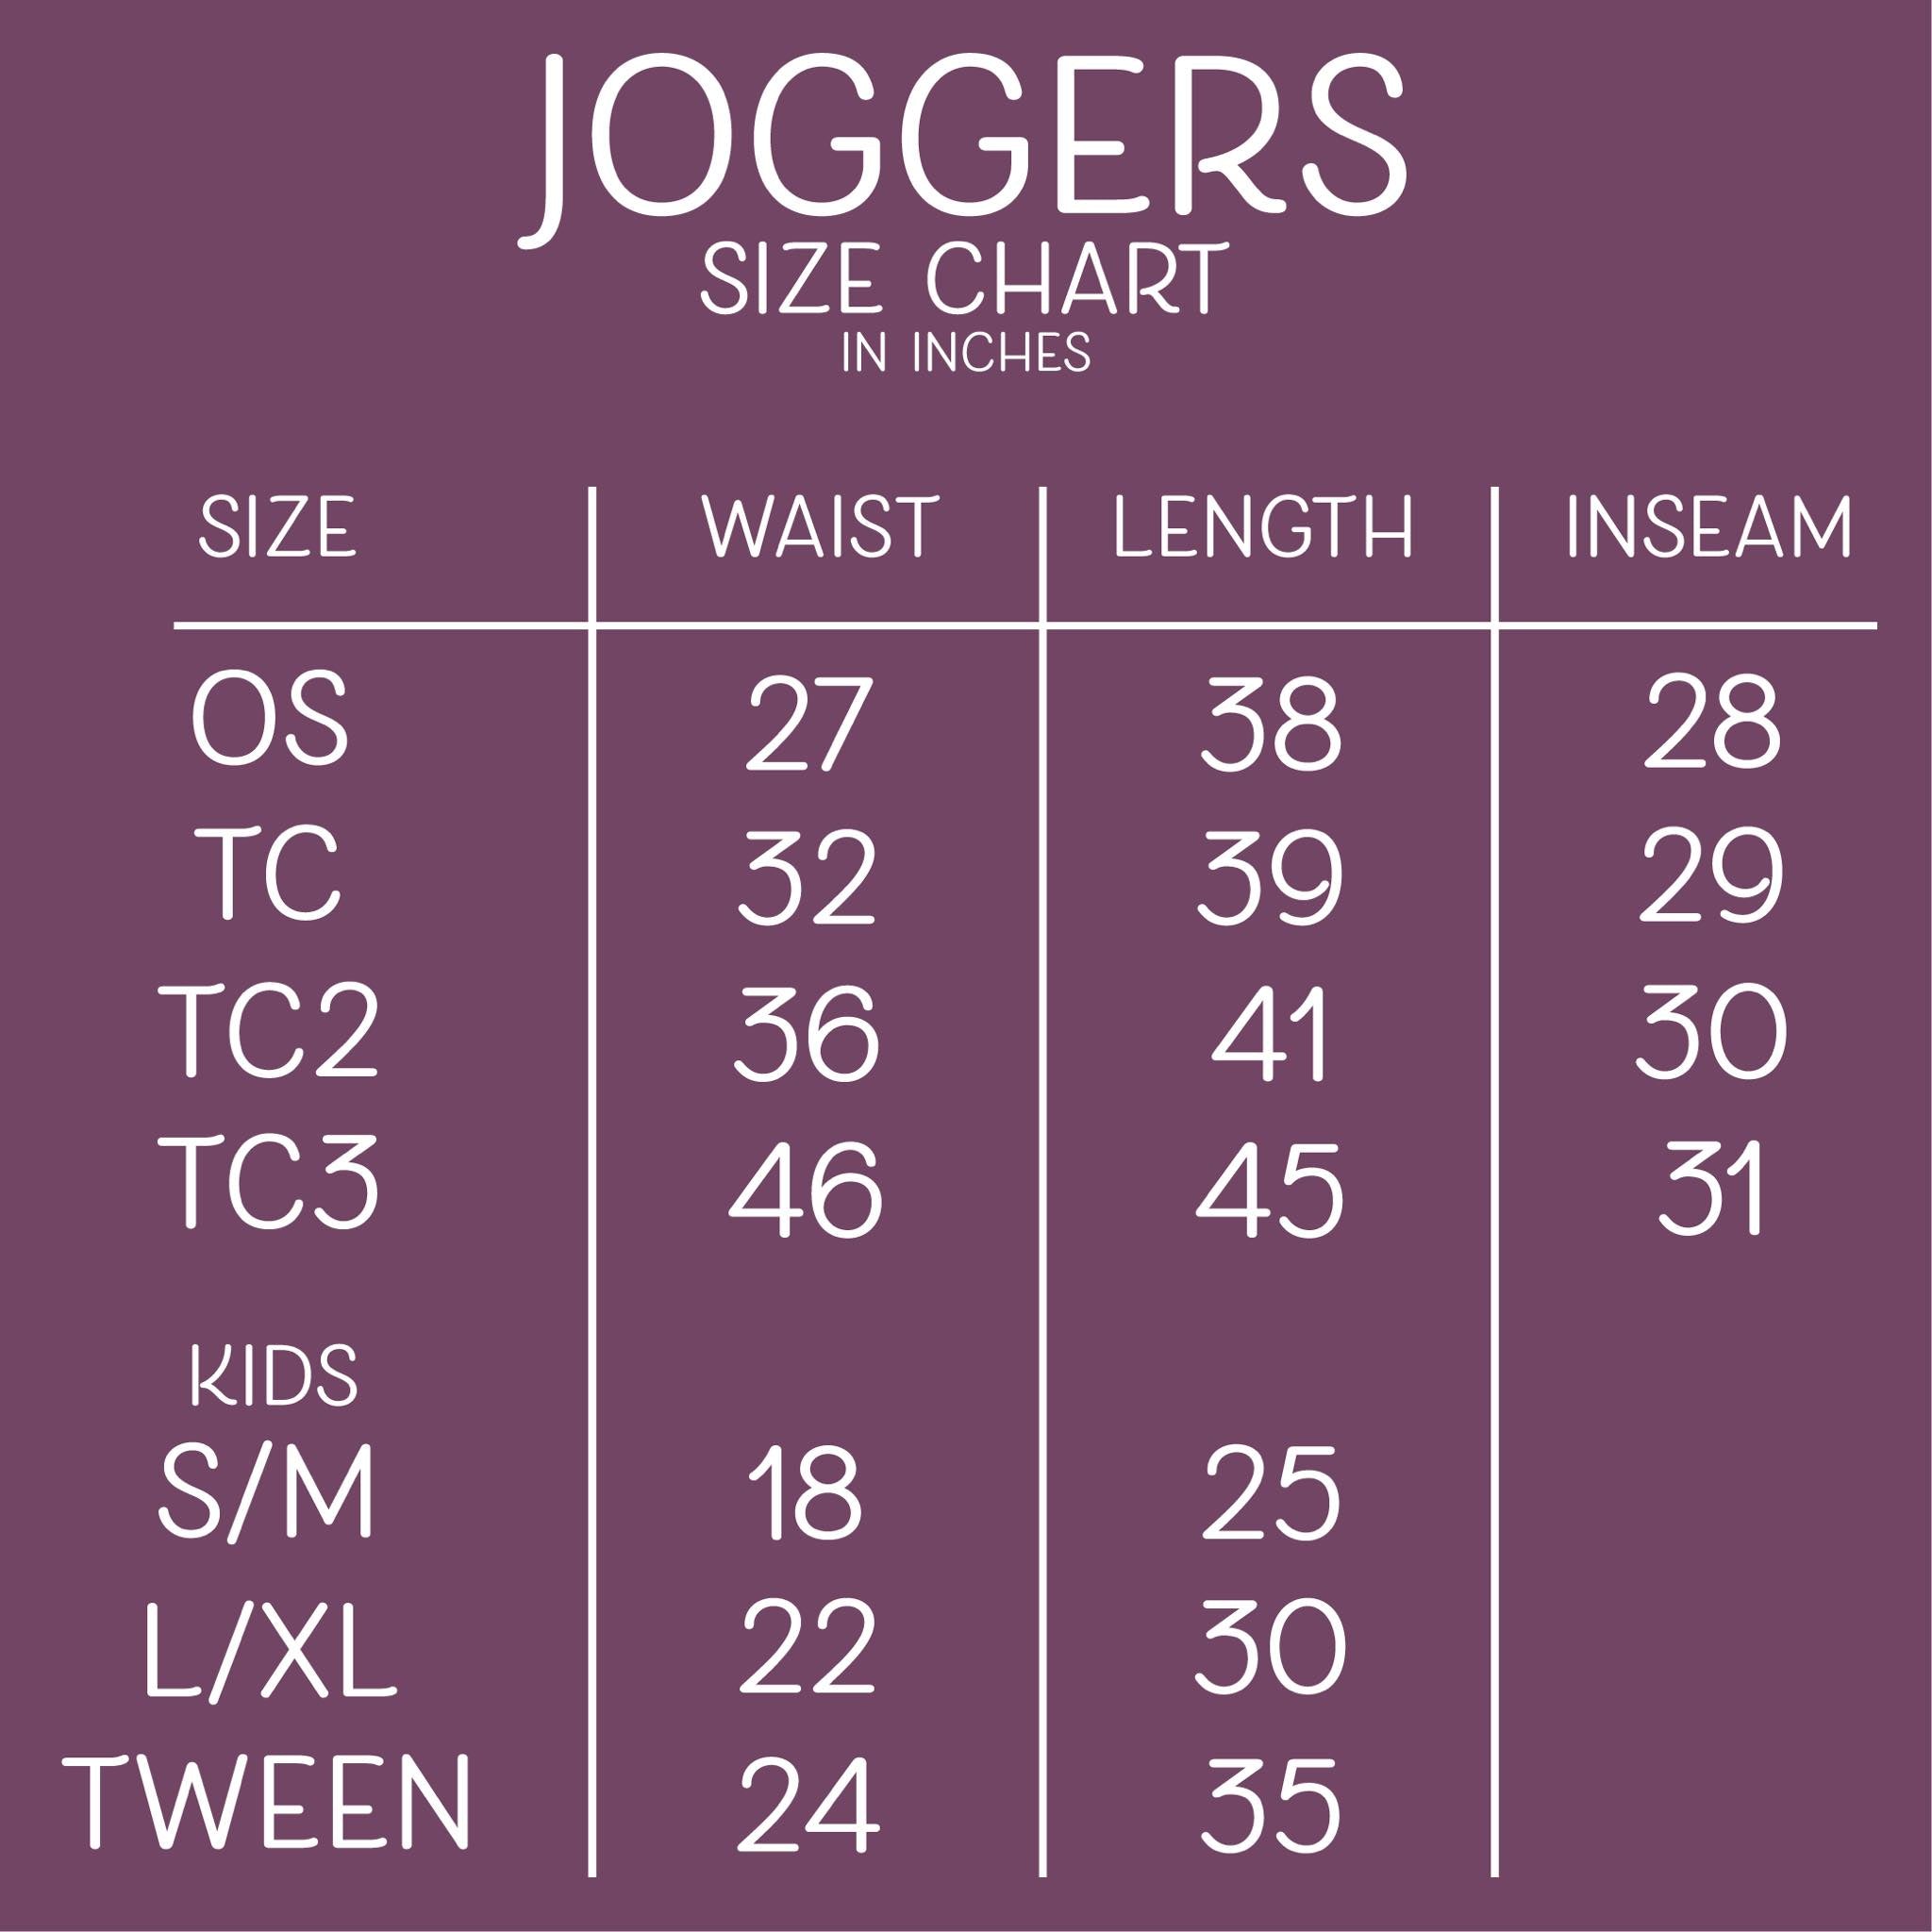 Bundled Up Joggers Full Length Preorder 0927